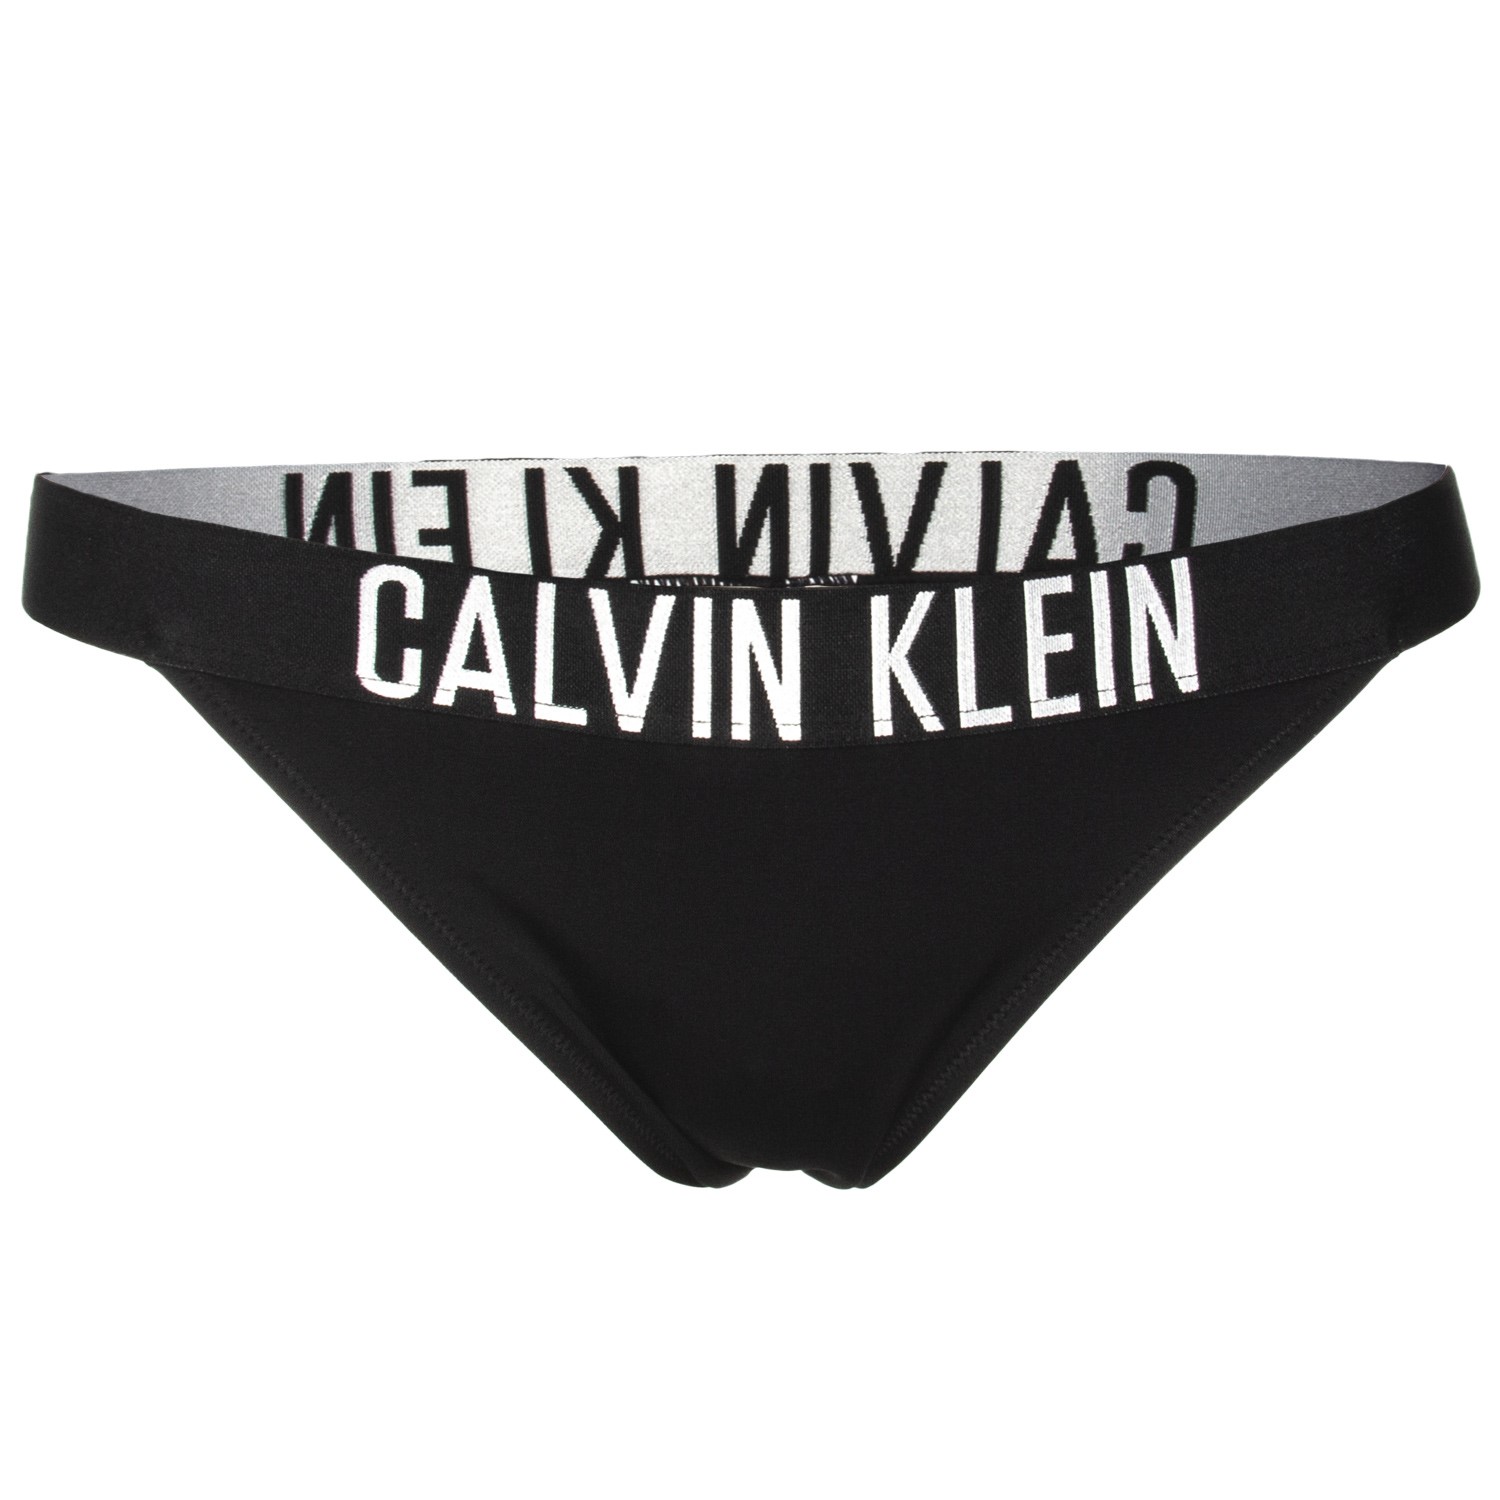 calvin klein intense power bikini